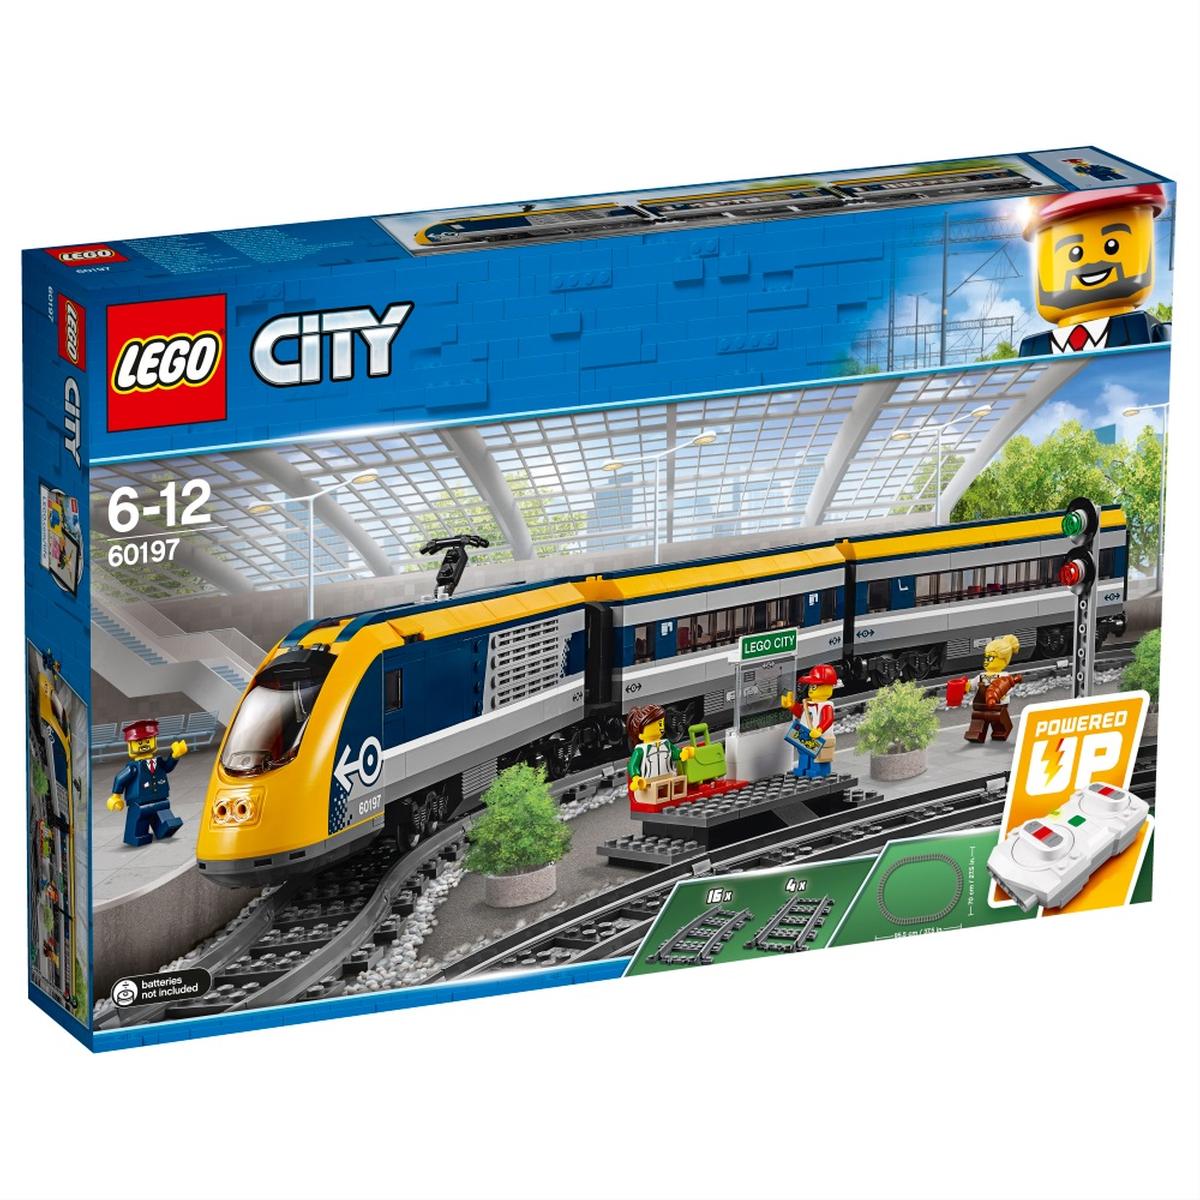 LEGO CITY TRAINS 60197 TREN DE PASAJEROS 6-12 AÑOS €54.10 headpinz.com